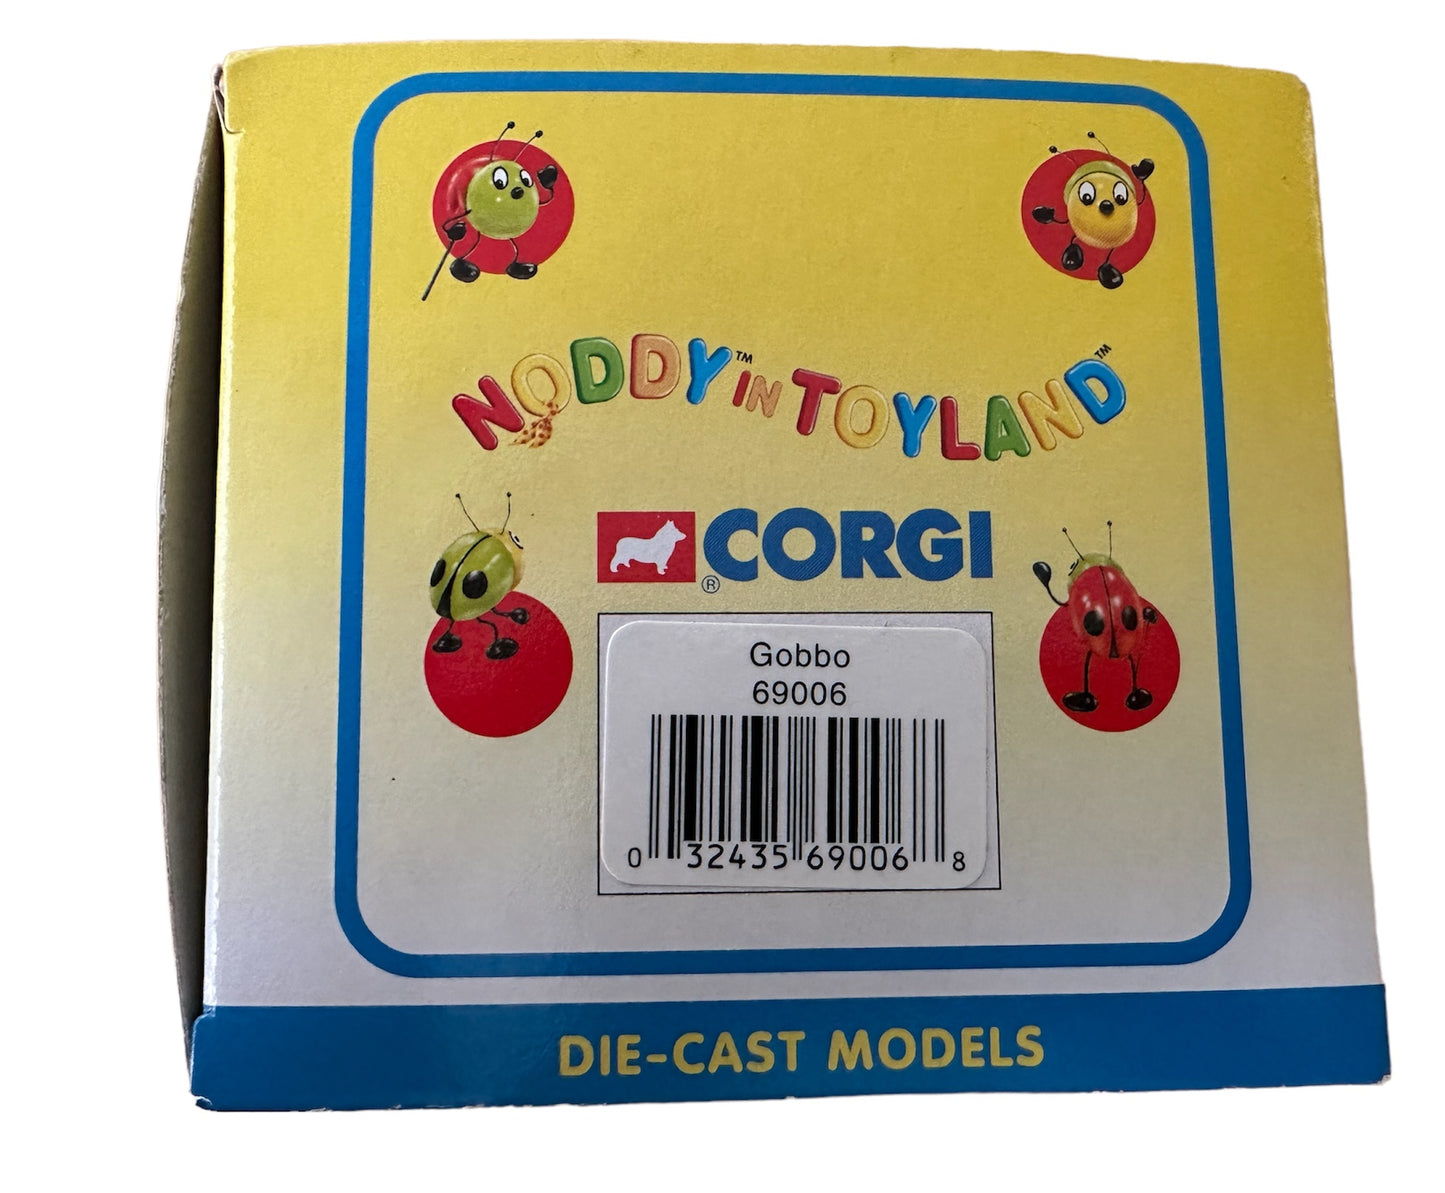 2001 Corgi Noddy In Toyland - Gobbos Van Die-Cast Model With Gobbo Figure - Brand New Shop Stock Room Find